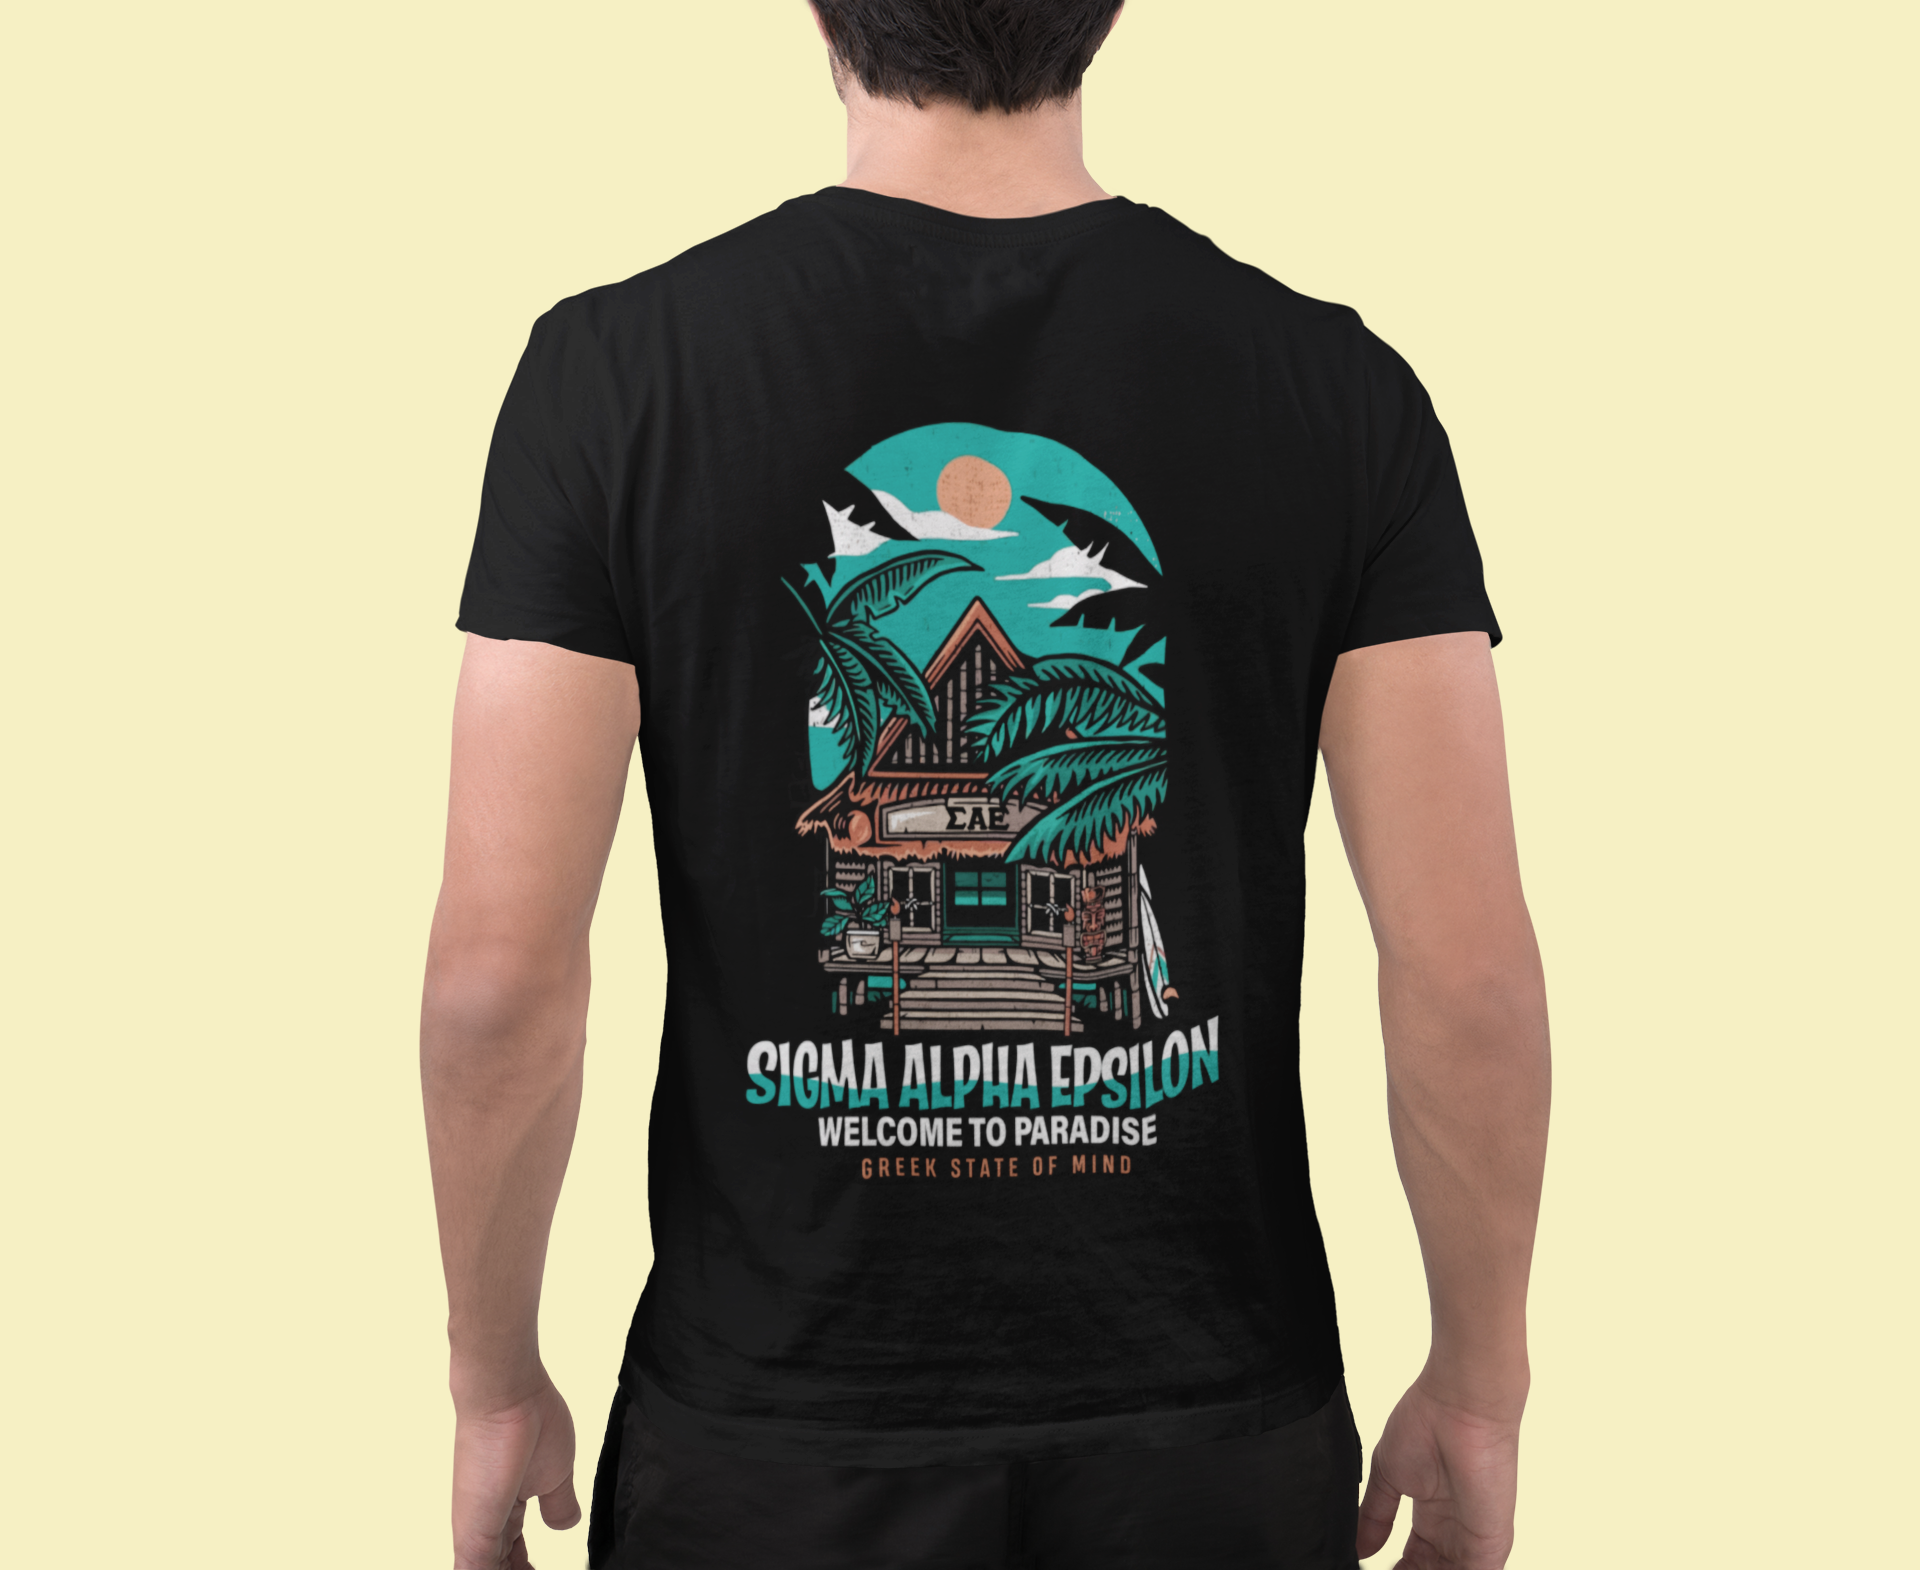 Sigma Alpha Epsilon Graphic T-Shirt | Welcome to Paradise | Sigma Alpha Epsilon Clothing and Merchandise model 